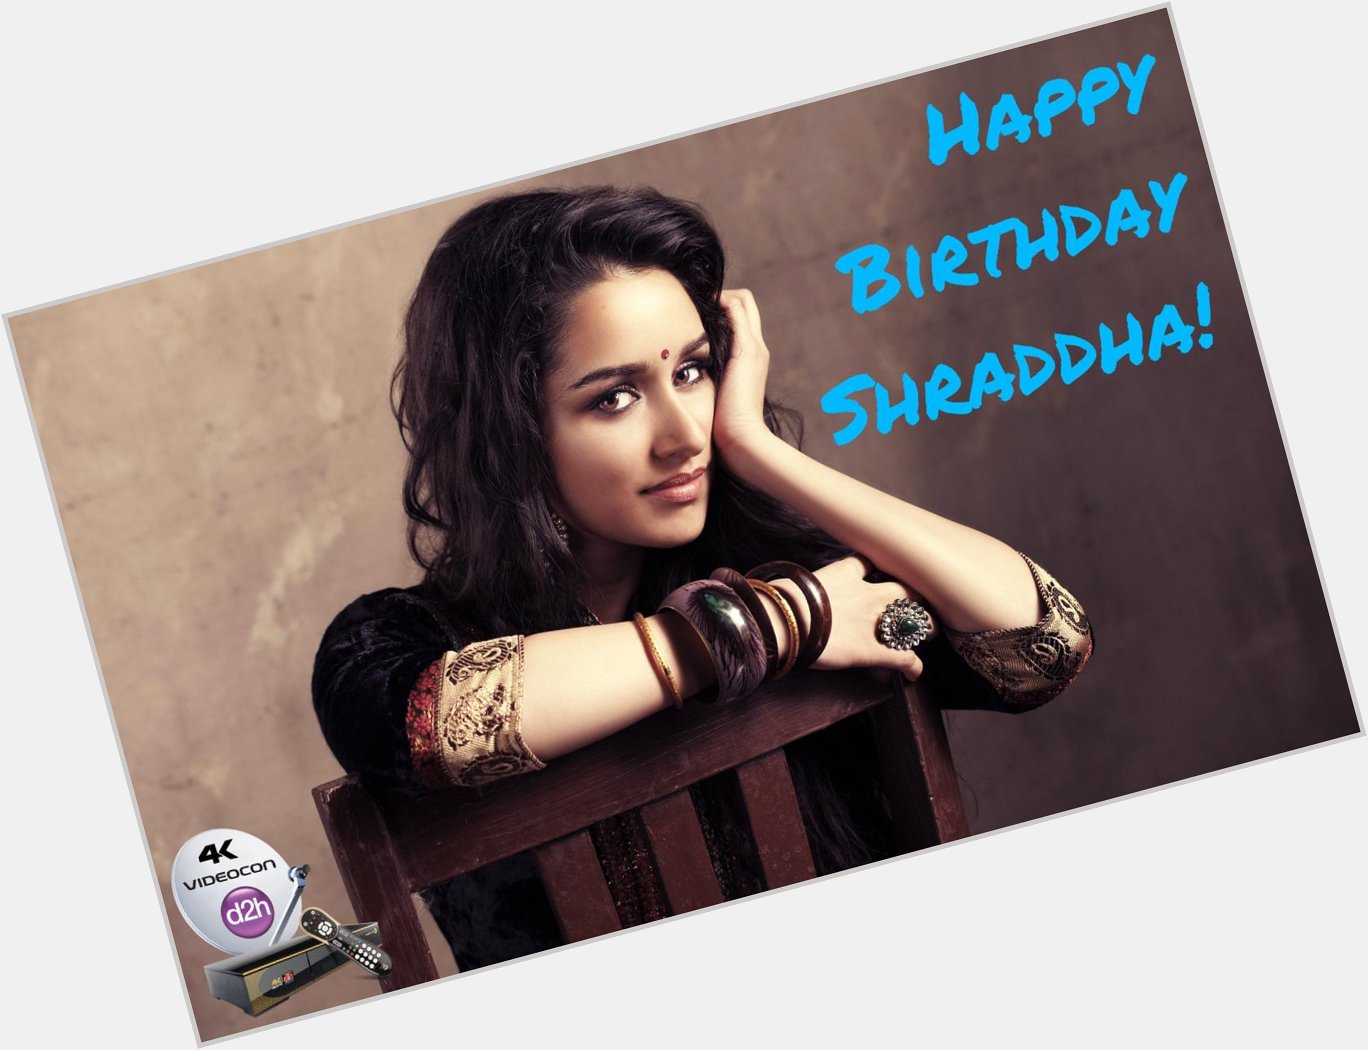 Happy Birthday Shraddha Kapoor!
Join us in wishing the Haider star an amazing year ahead. 